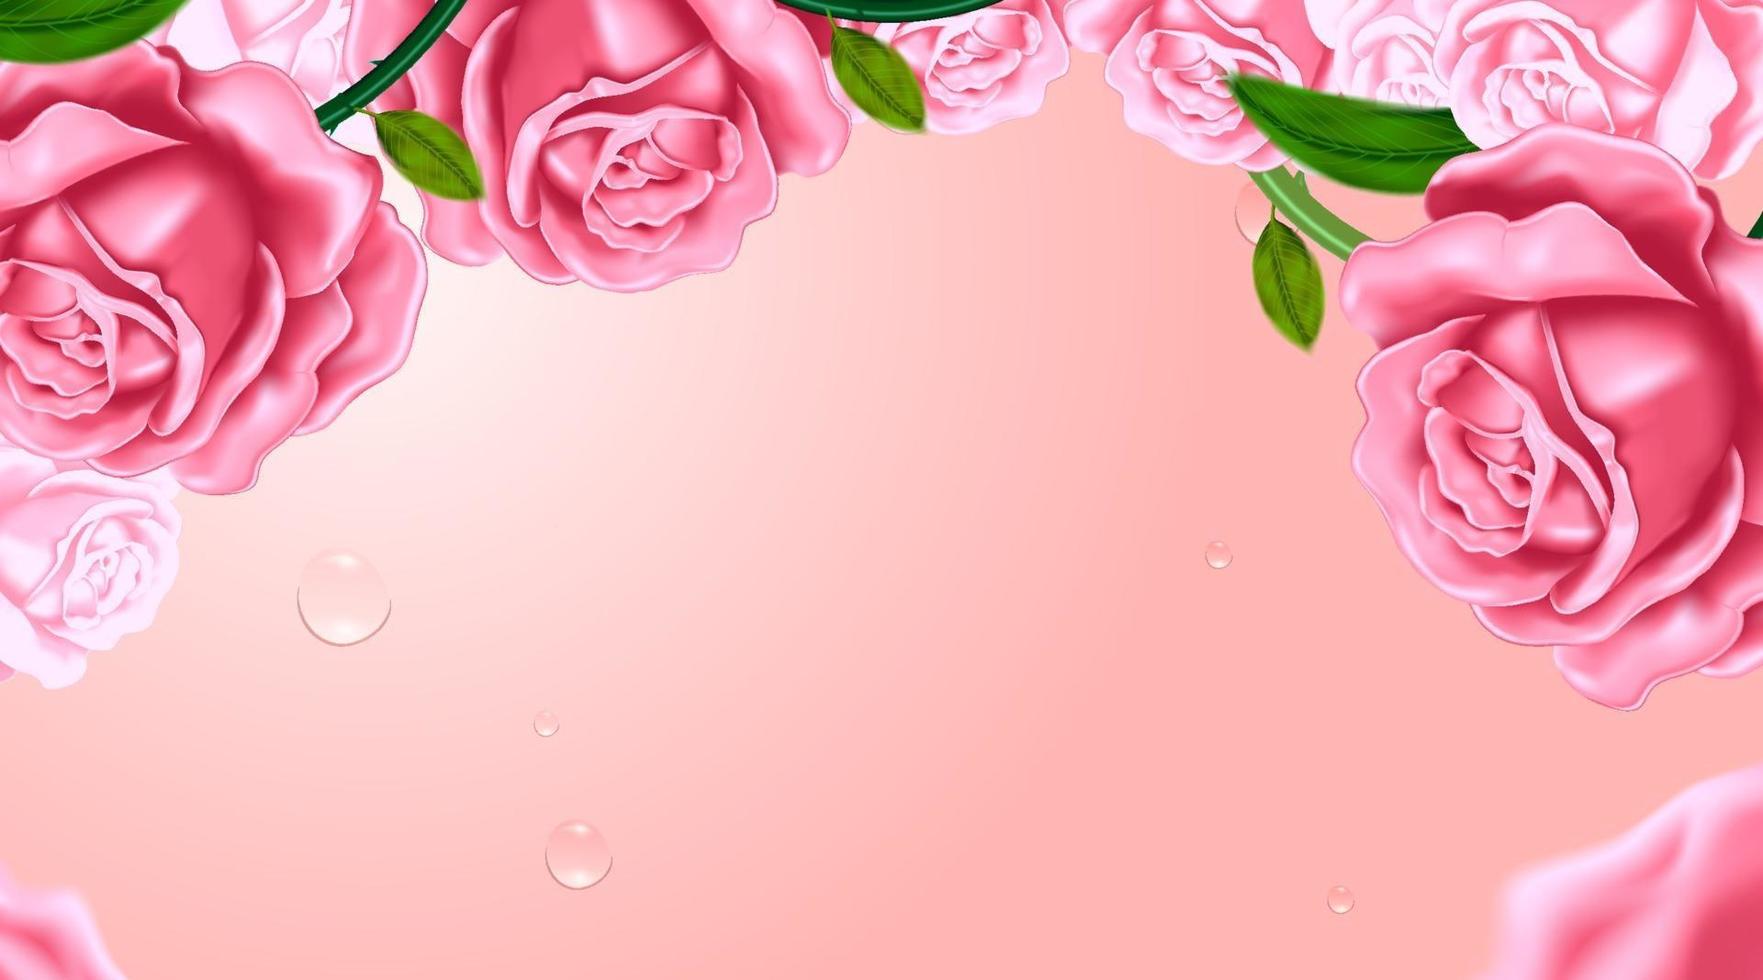 Rosen im rosa Hintergrund vektor